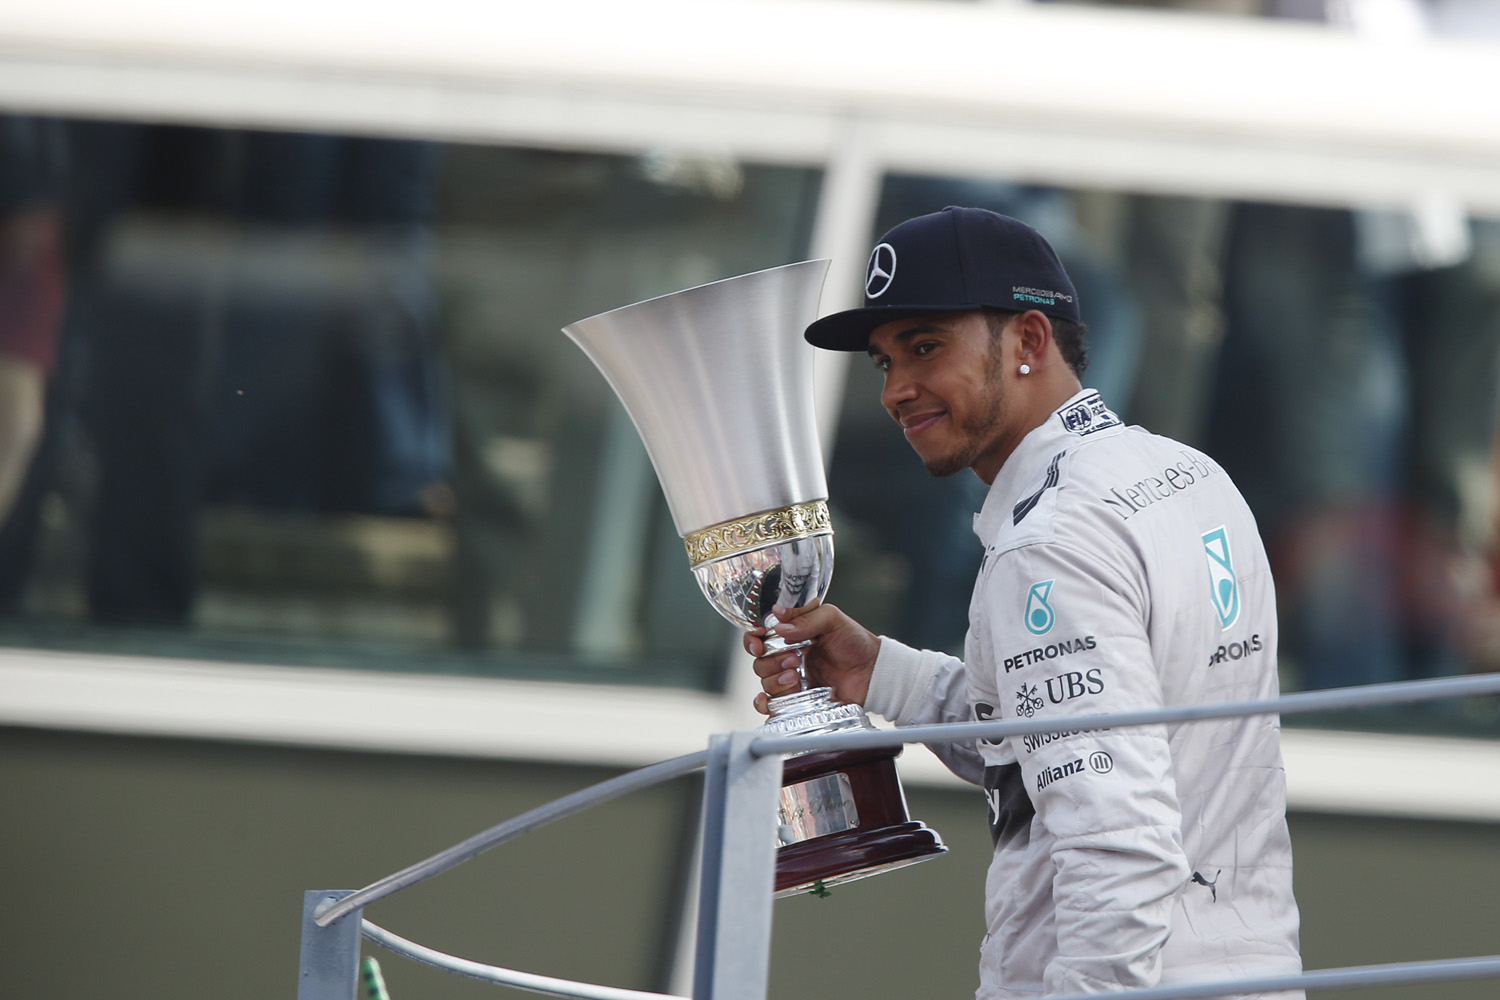 Fórmula 1 - GP de Italia 2014, Ganador Lewis Hamilton